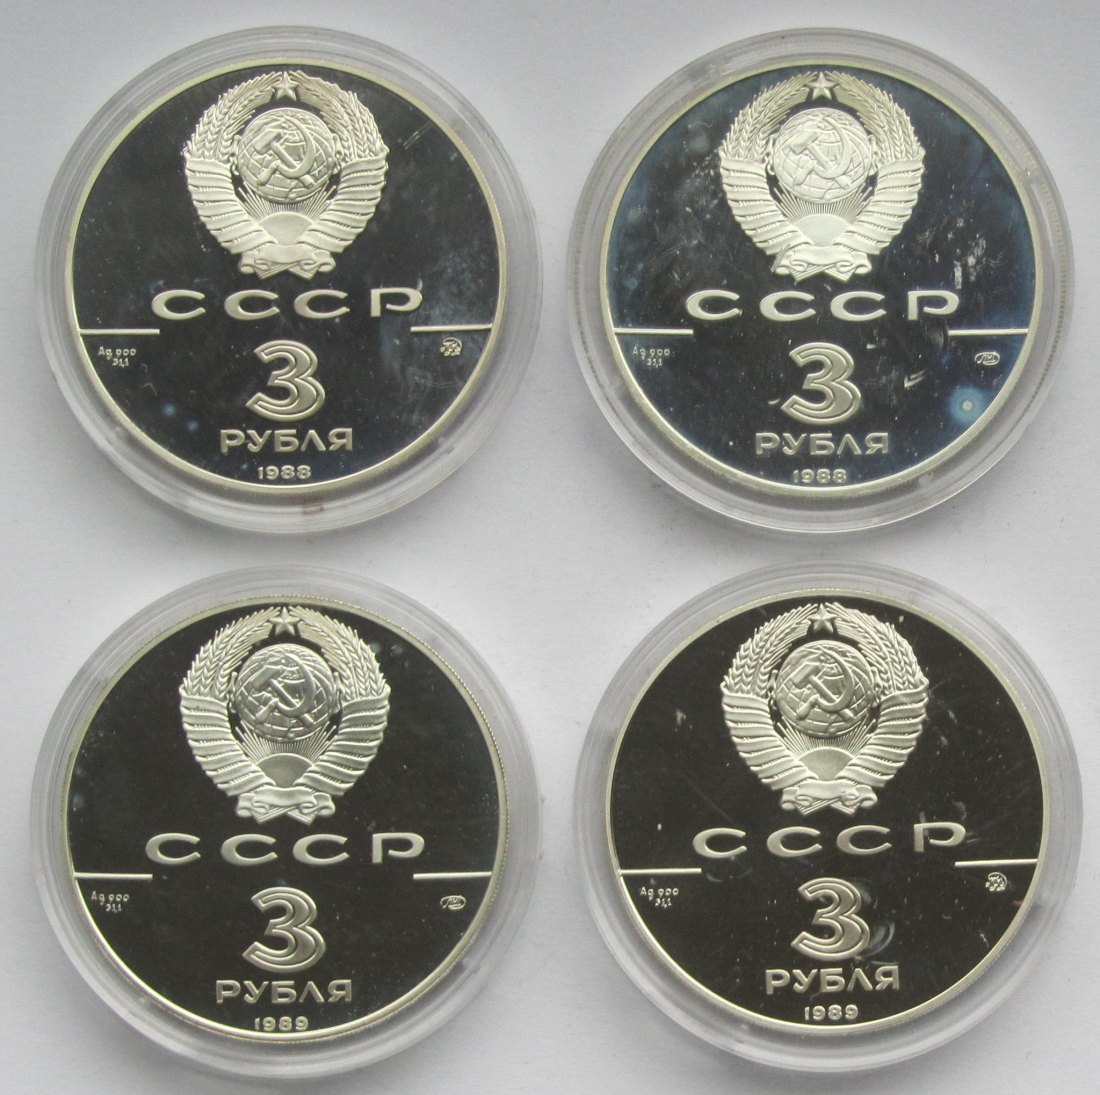  Sowjetunion/Russland: 4 x 3 Rubel 1988/1989, zusammen 124,4 g Feinsilber   